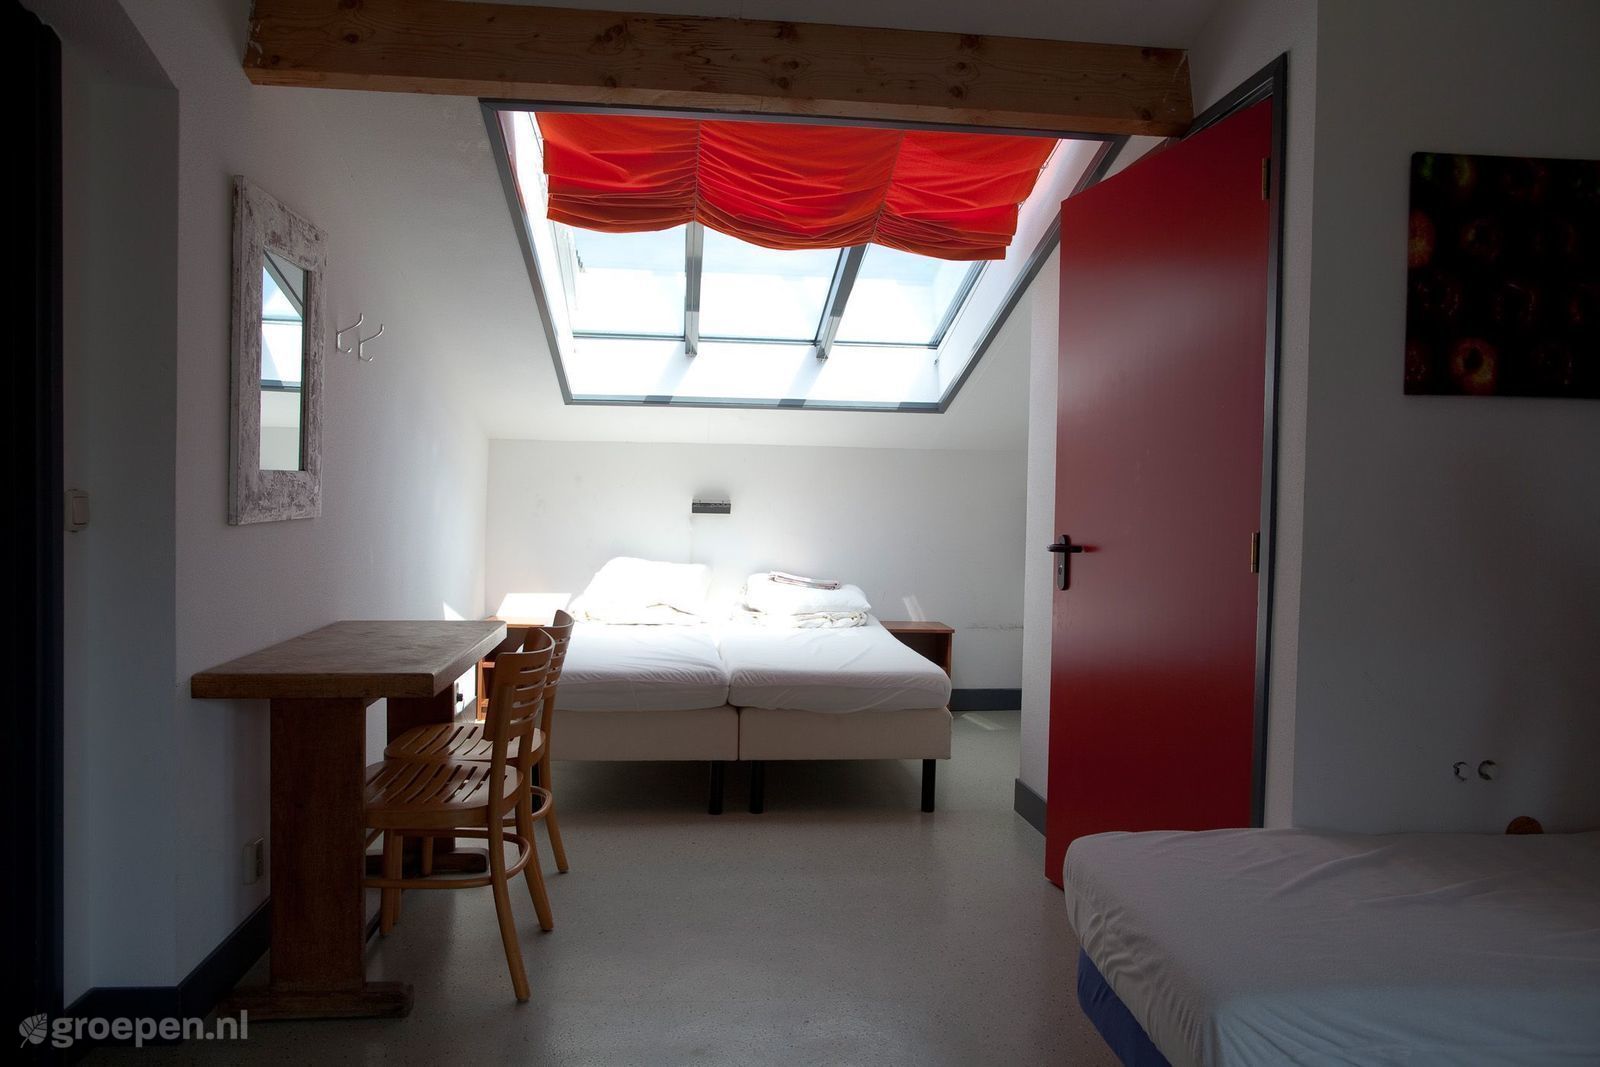 Group accommodation Waarland